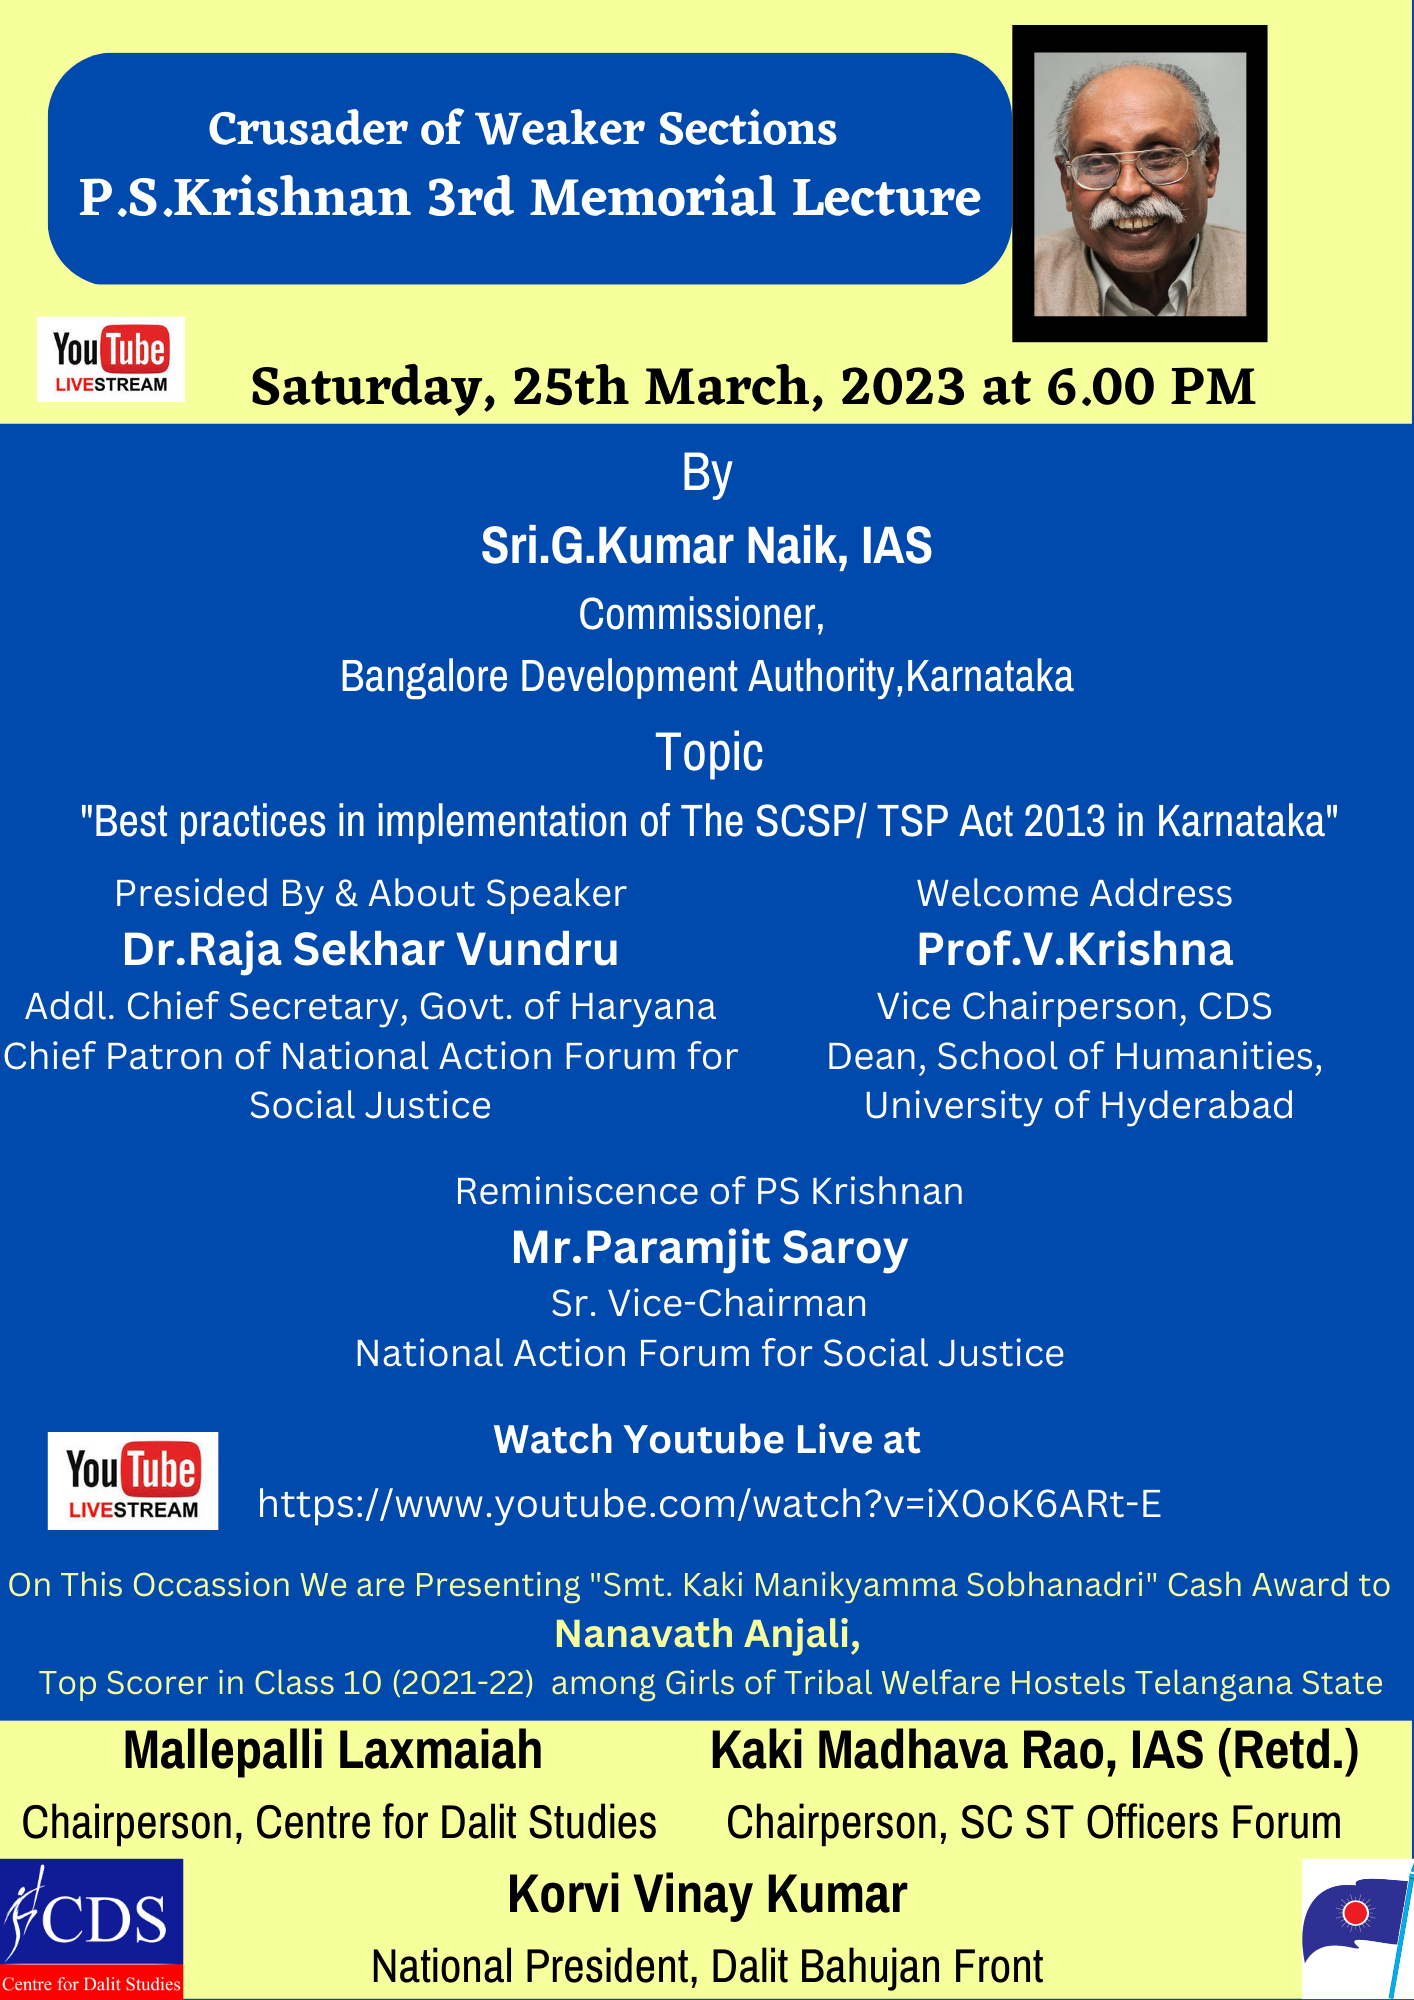 PS Krishnan Memorial Lecture by Centre for Dalit Studies